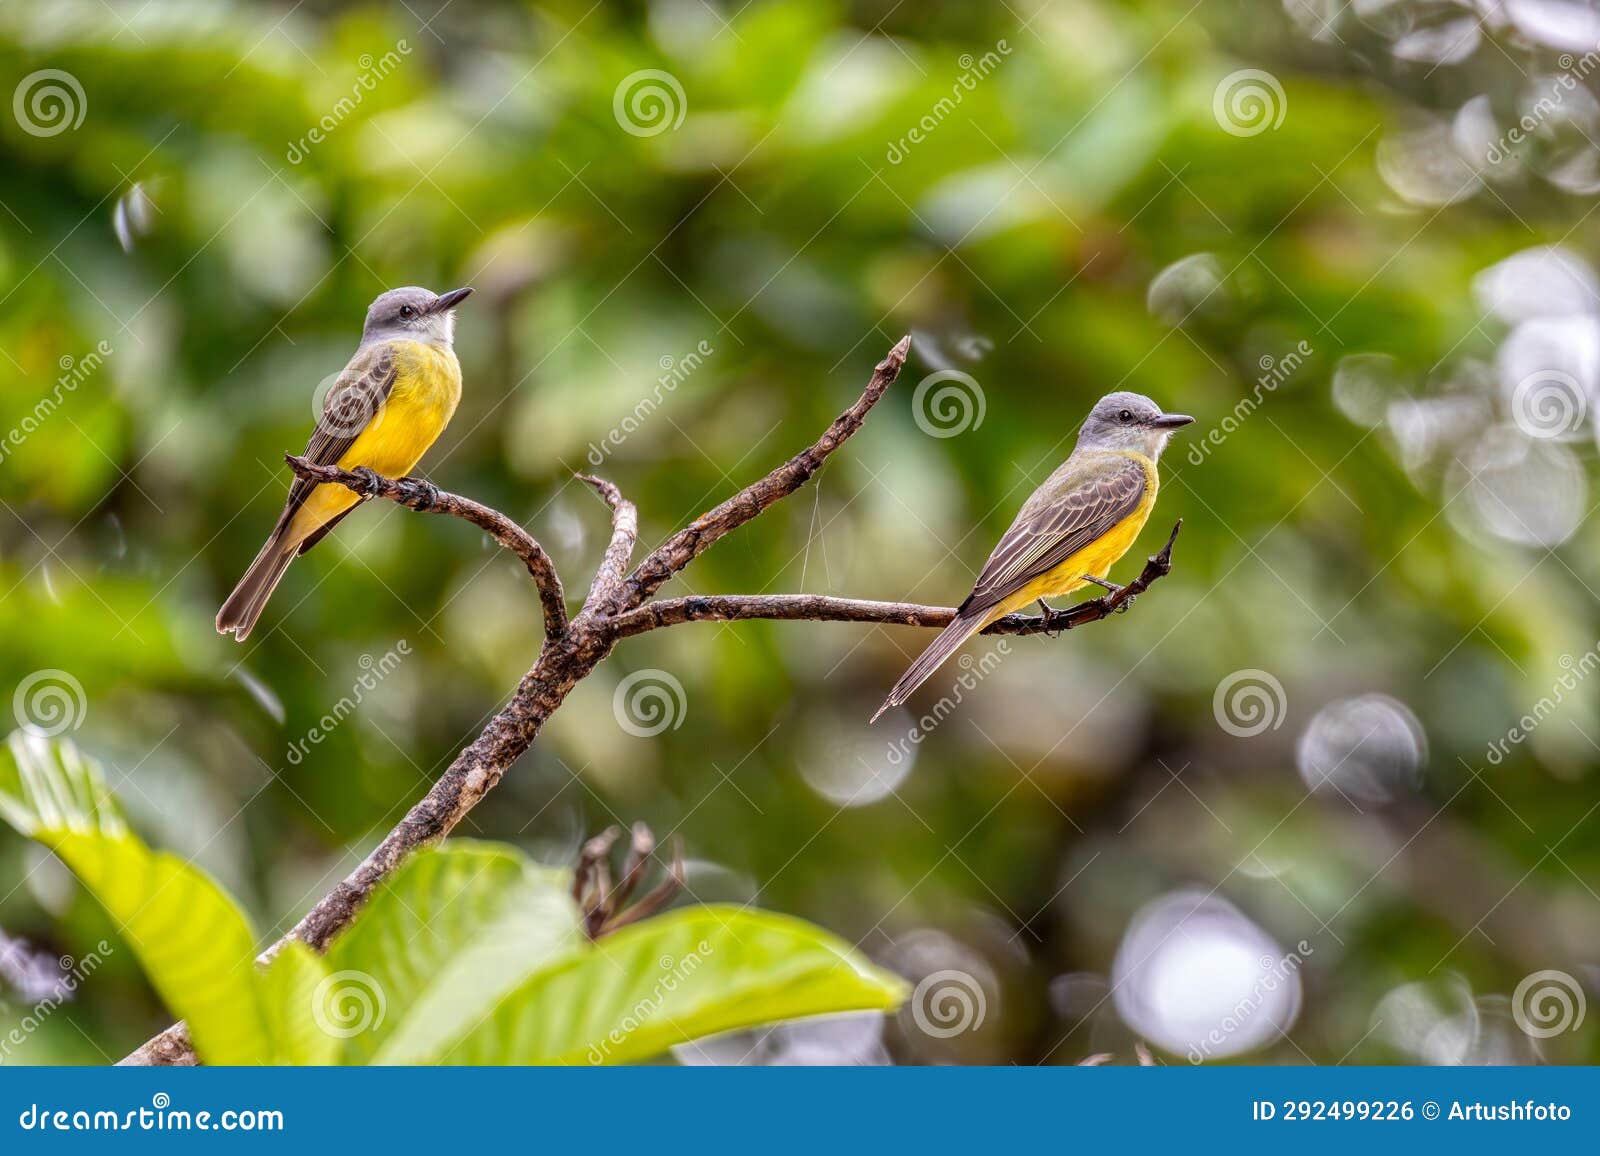 tropical kingbird, tyrannus melancholicus. refugio de vida silvestre cano negro, wildlife and bird watching in costa rica